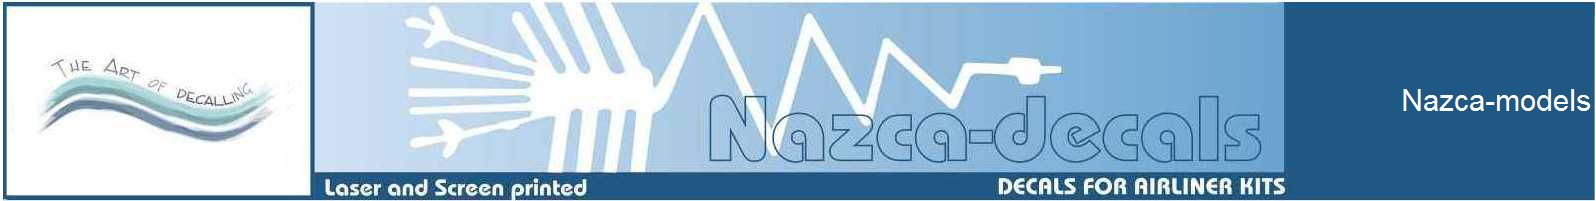 Nazca-models